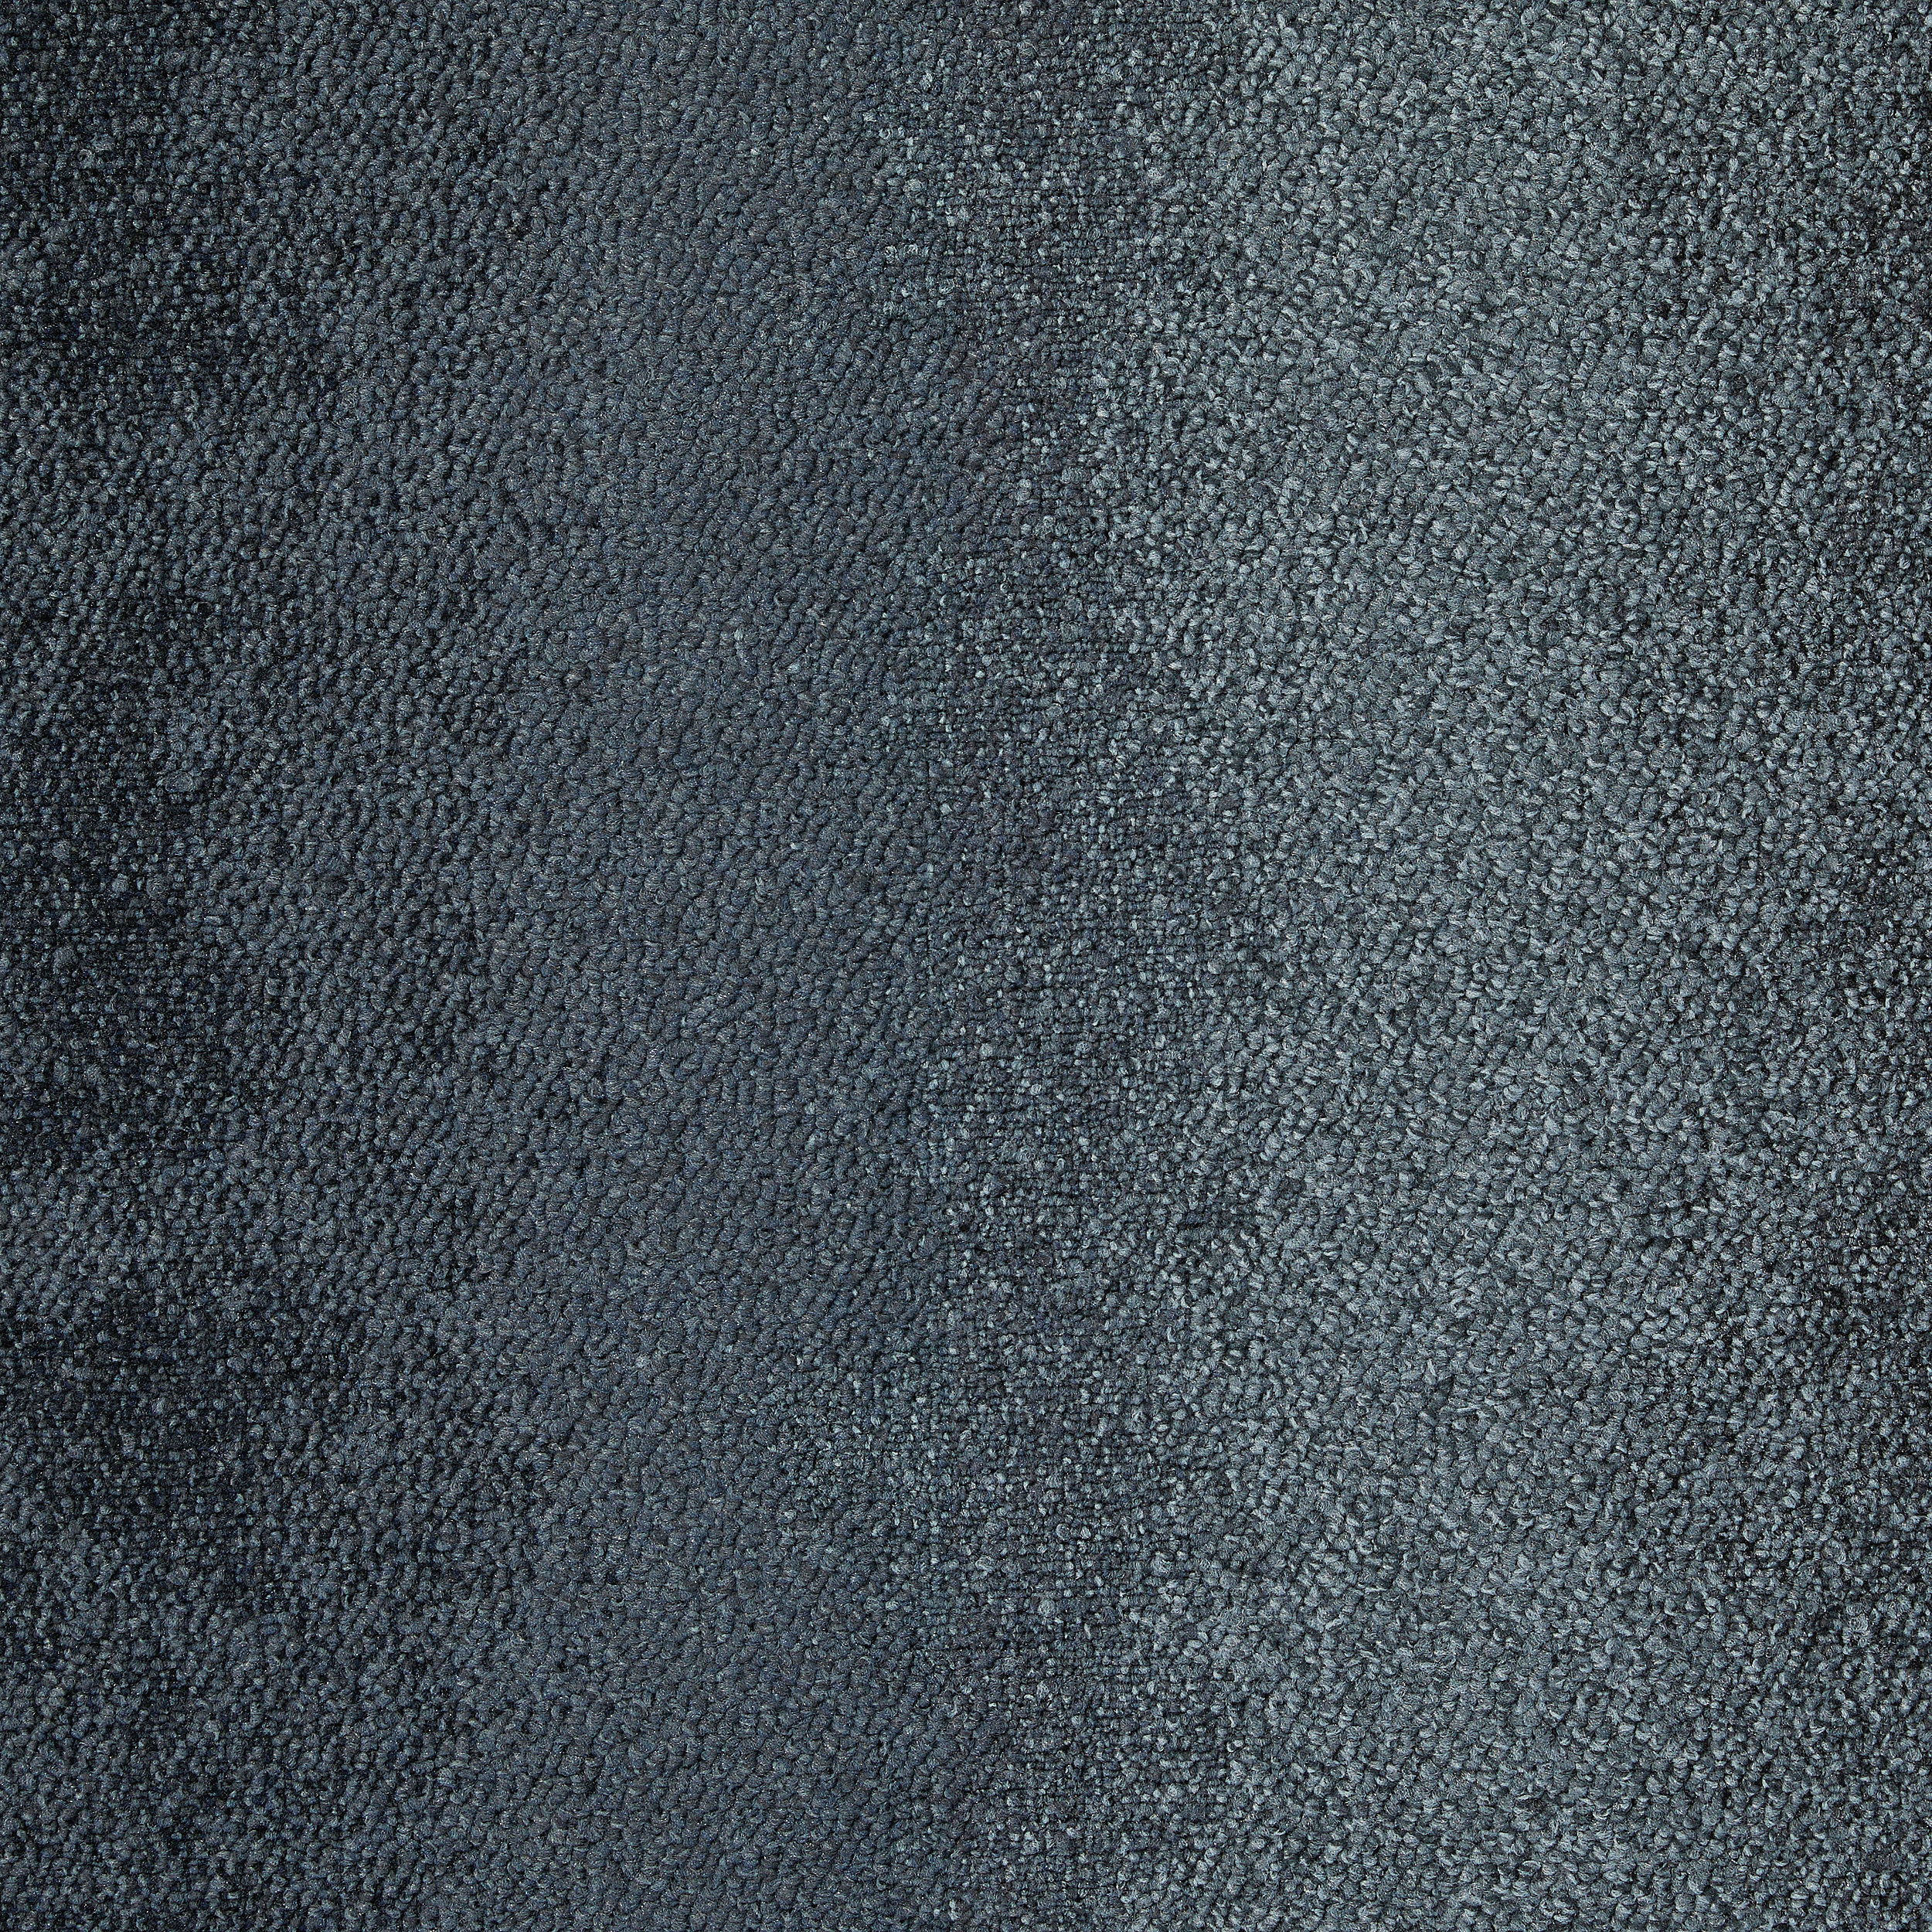 CE200 Carpet Tile in Perceive/Identify afbeeldingnummer 8